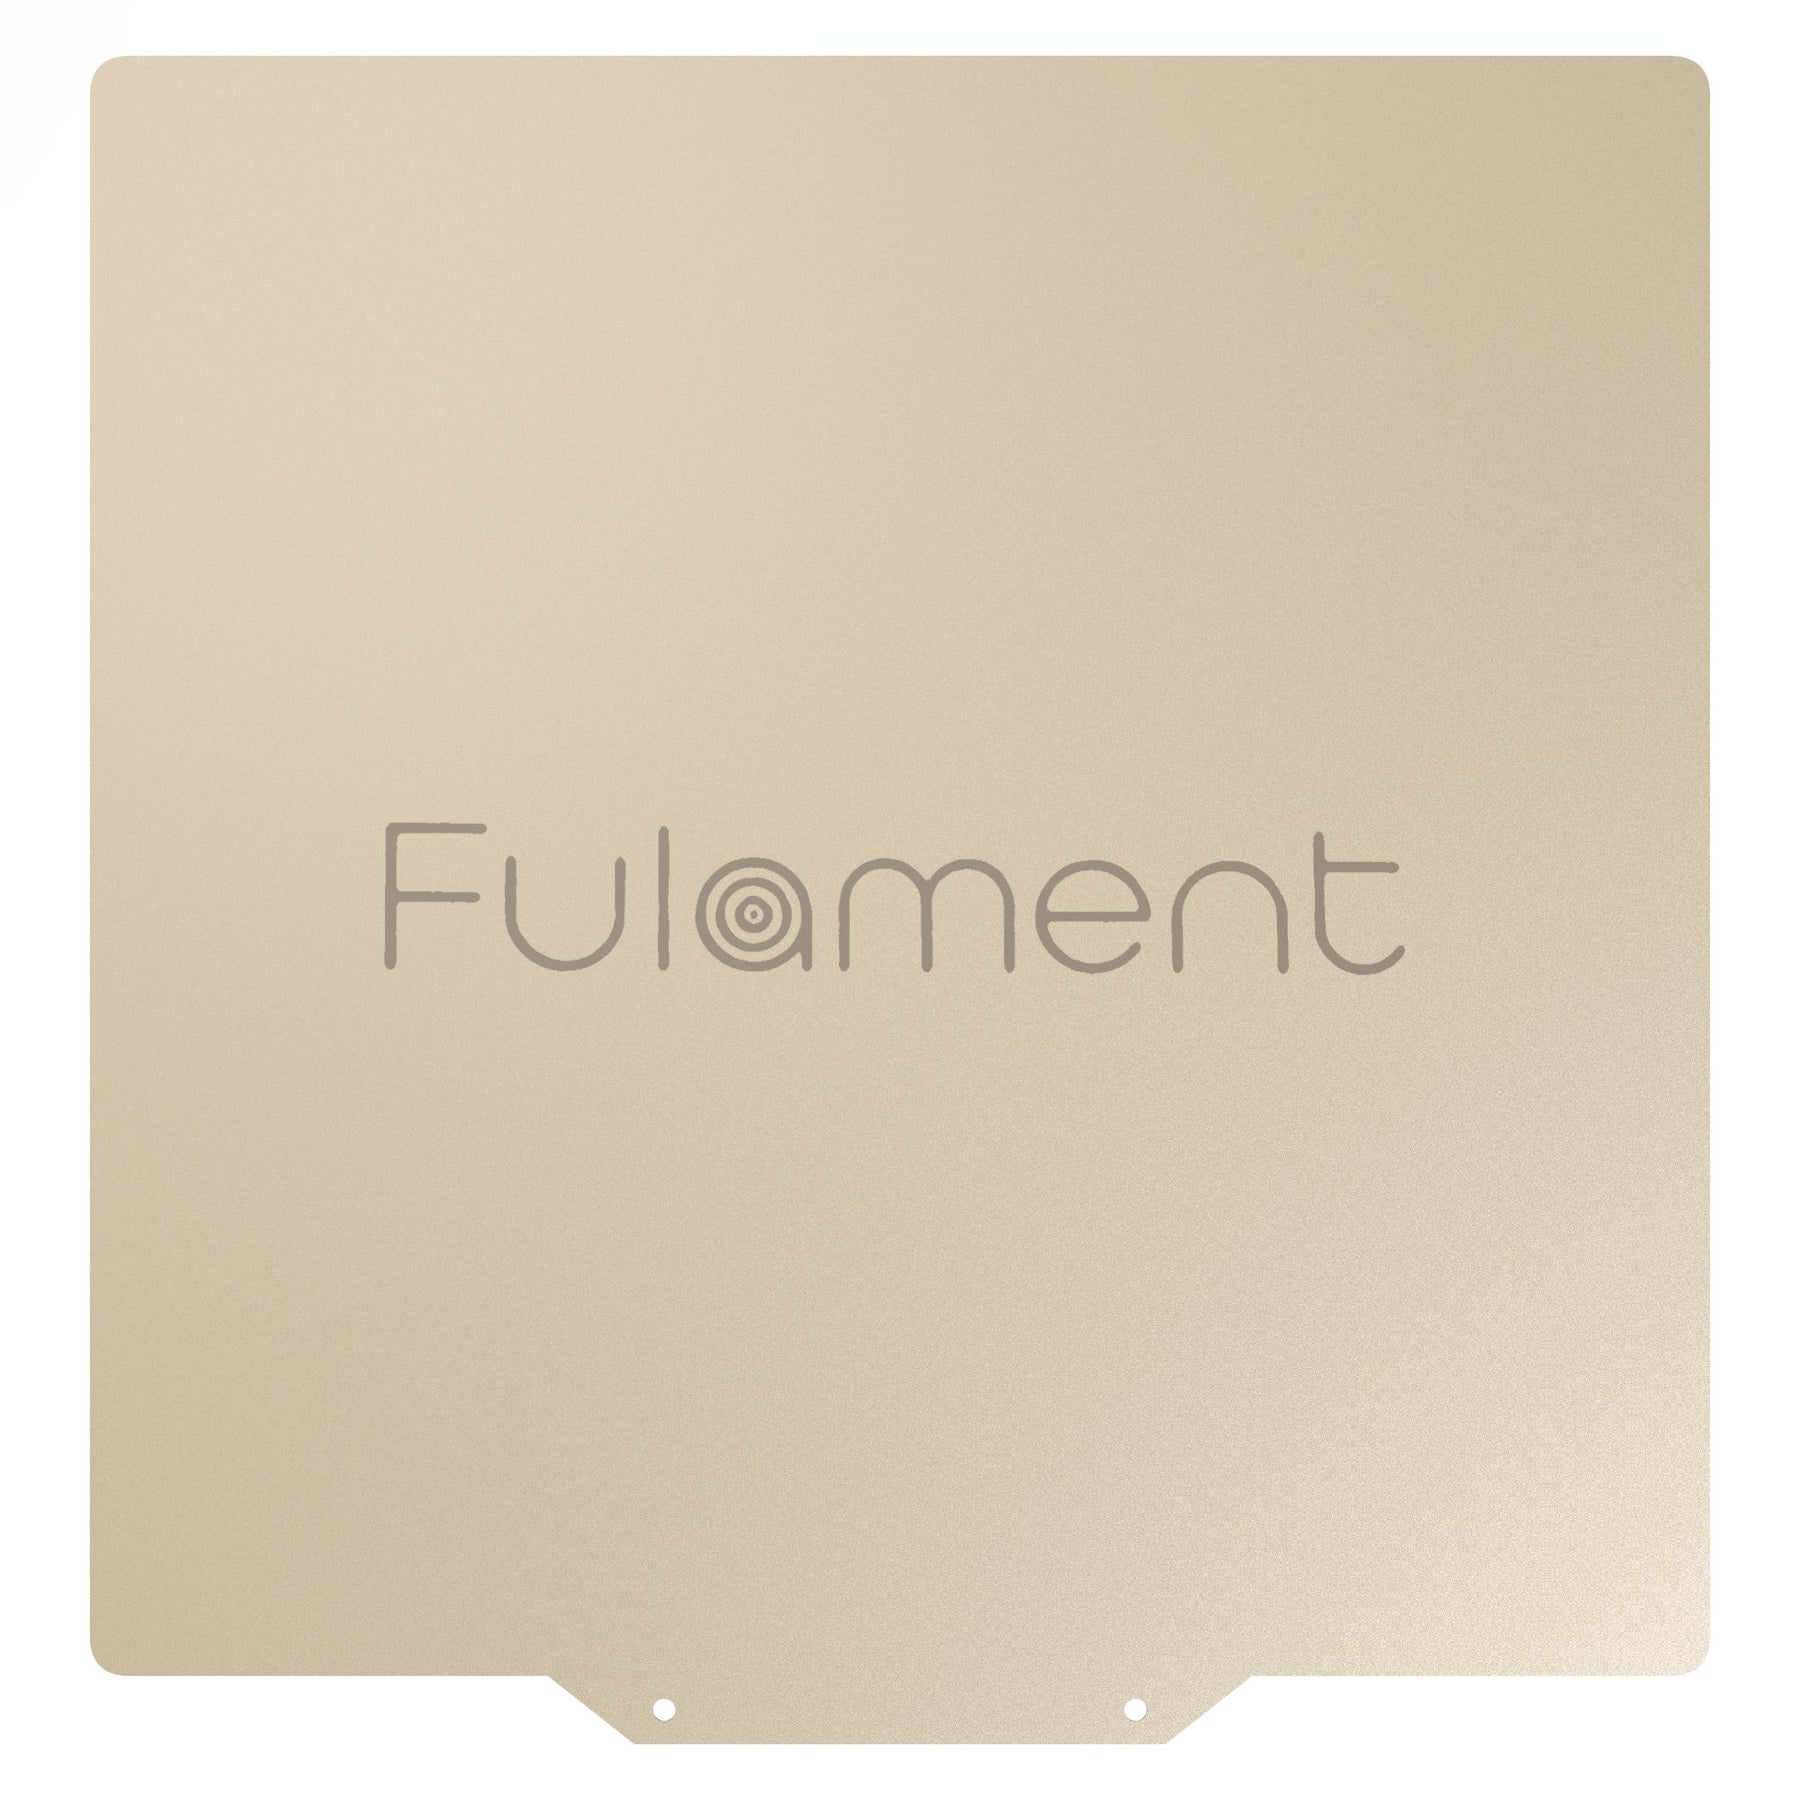 Alfawise Fula-Flex 2.0 Fulament